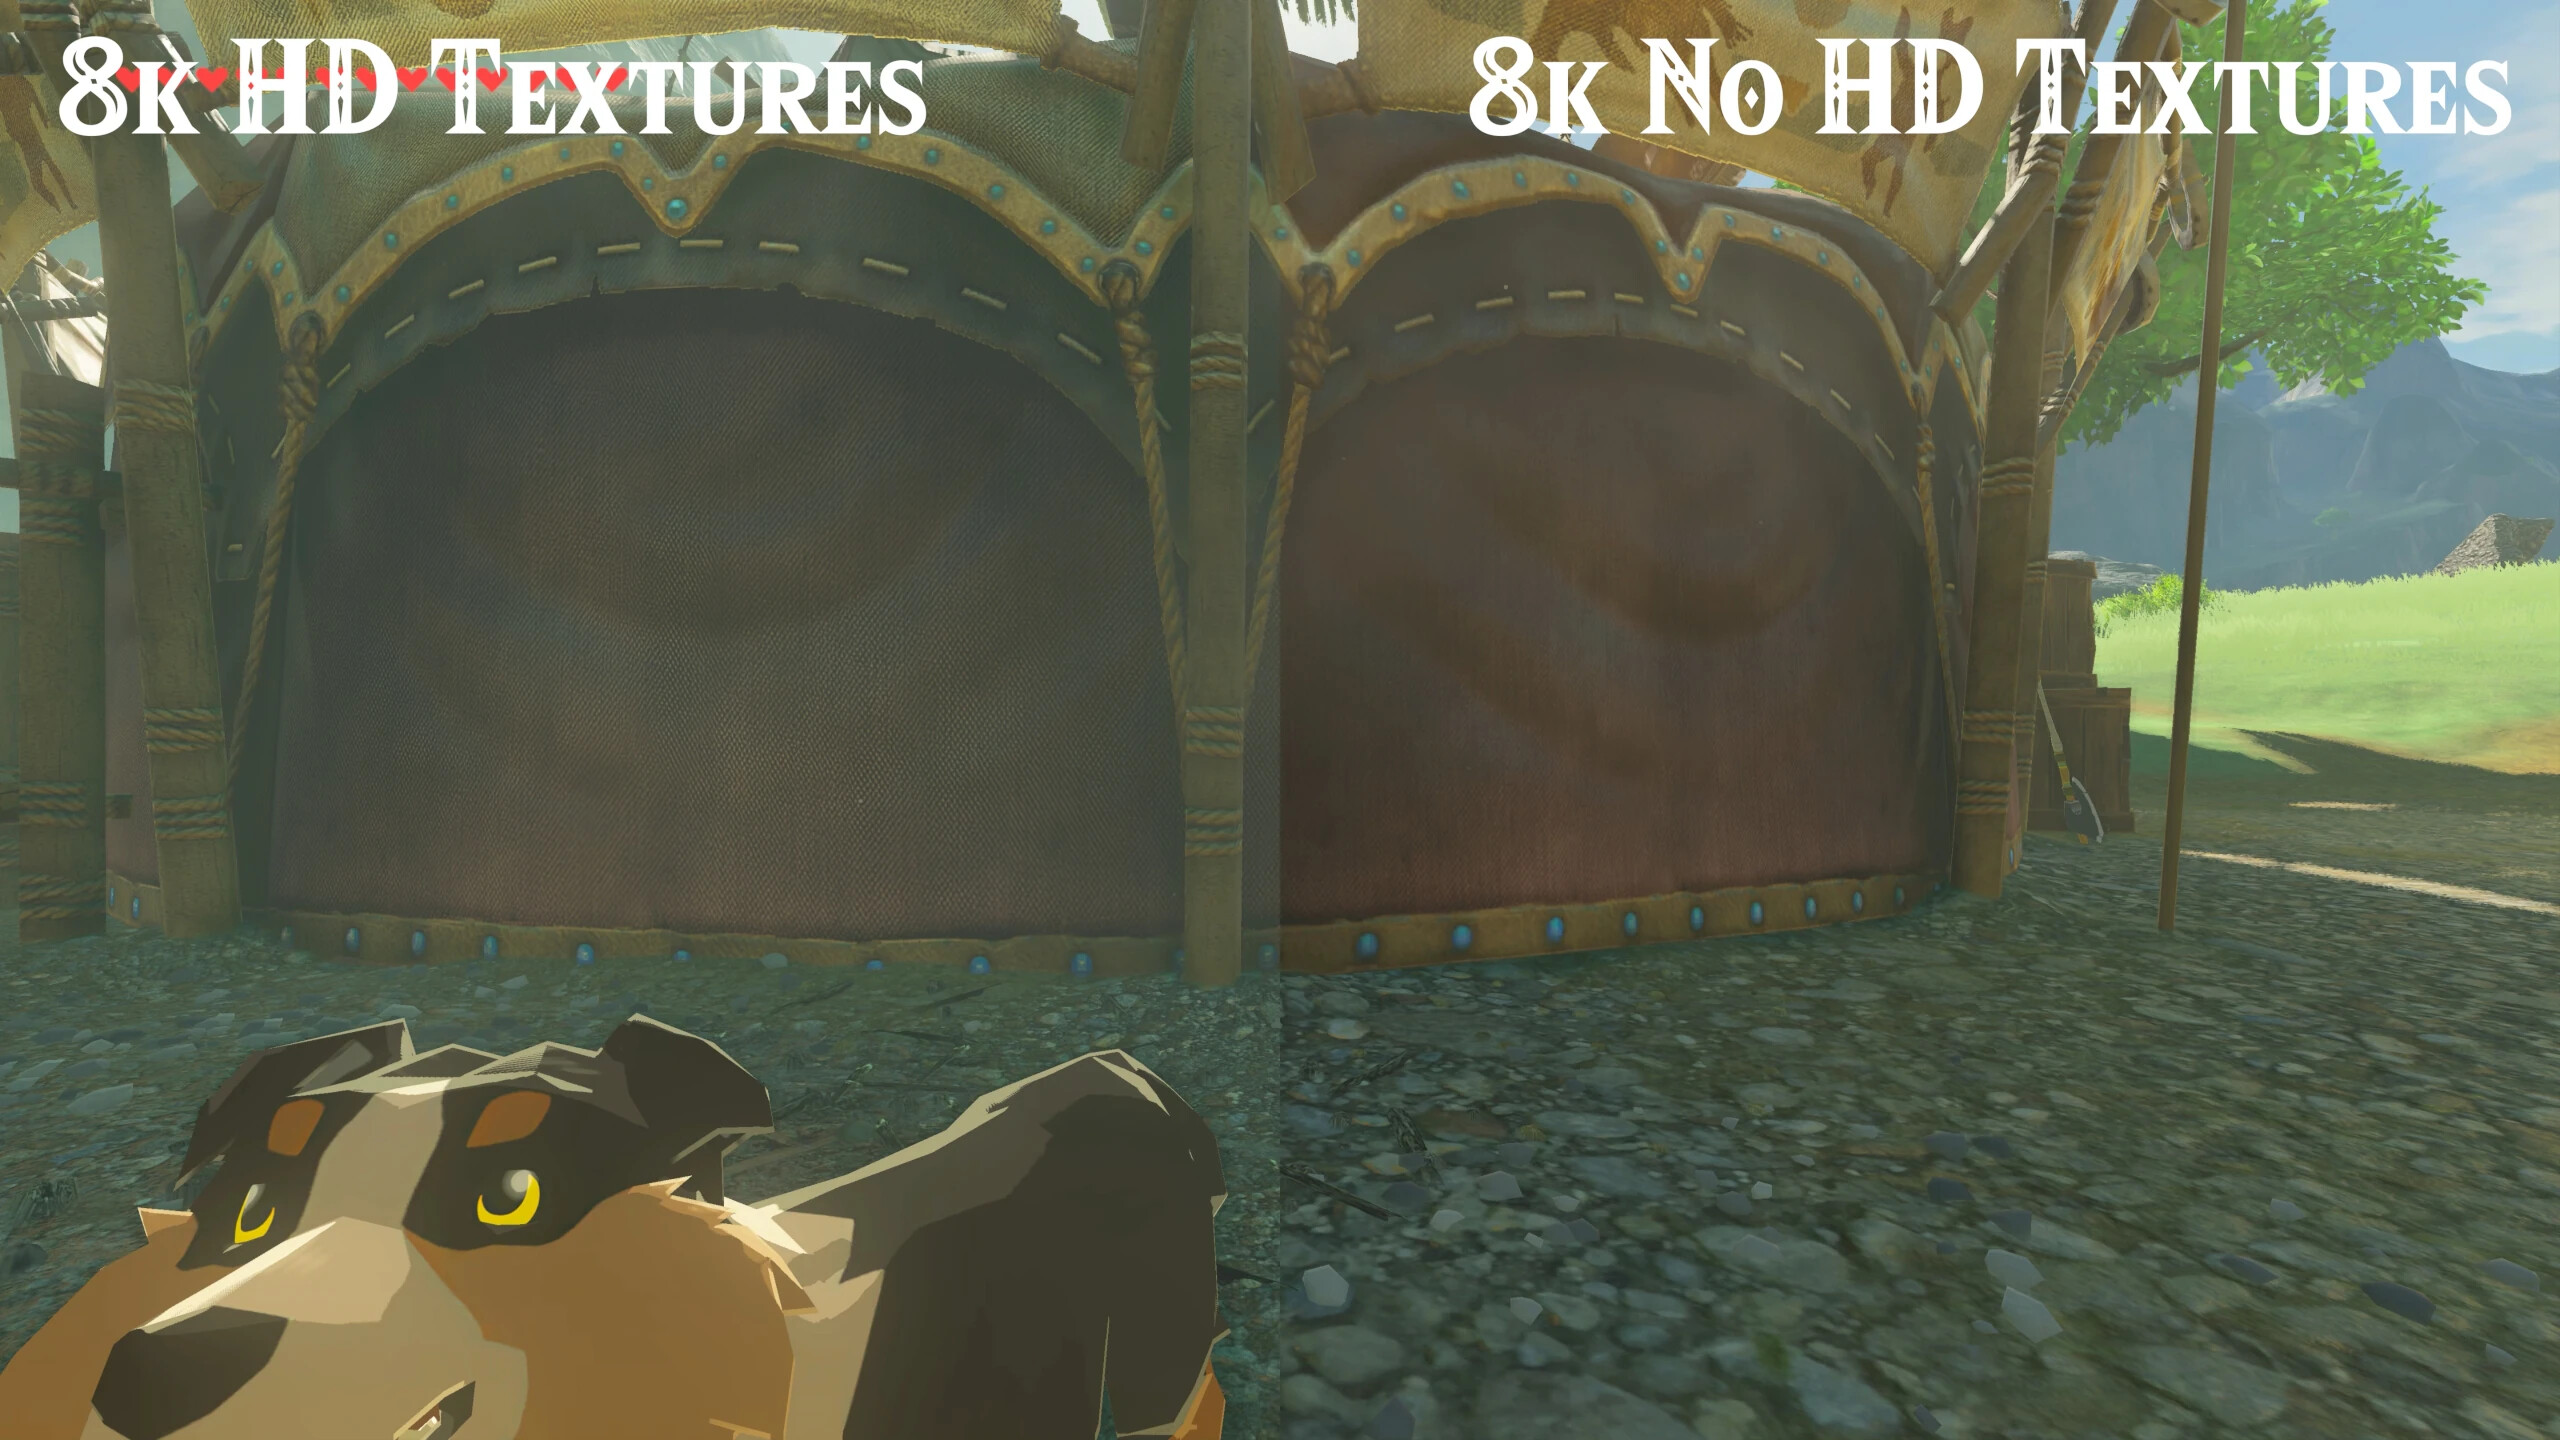 Texture Pack Comparison Screenshot